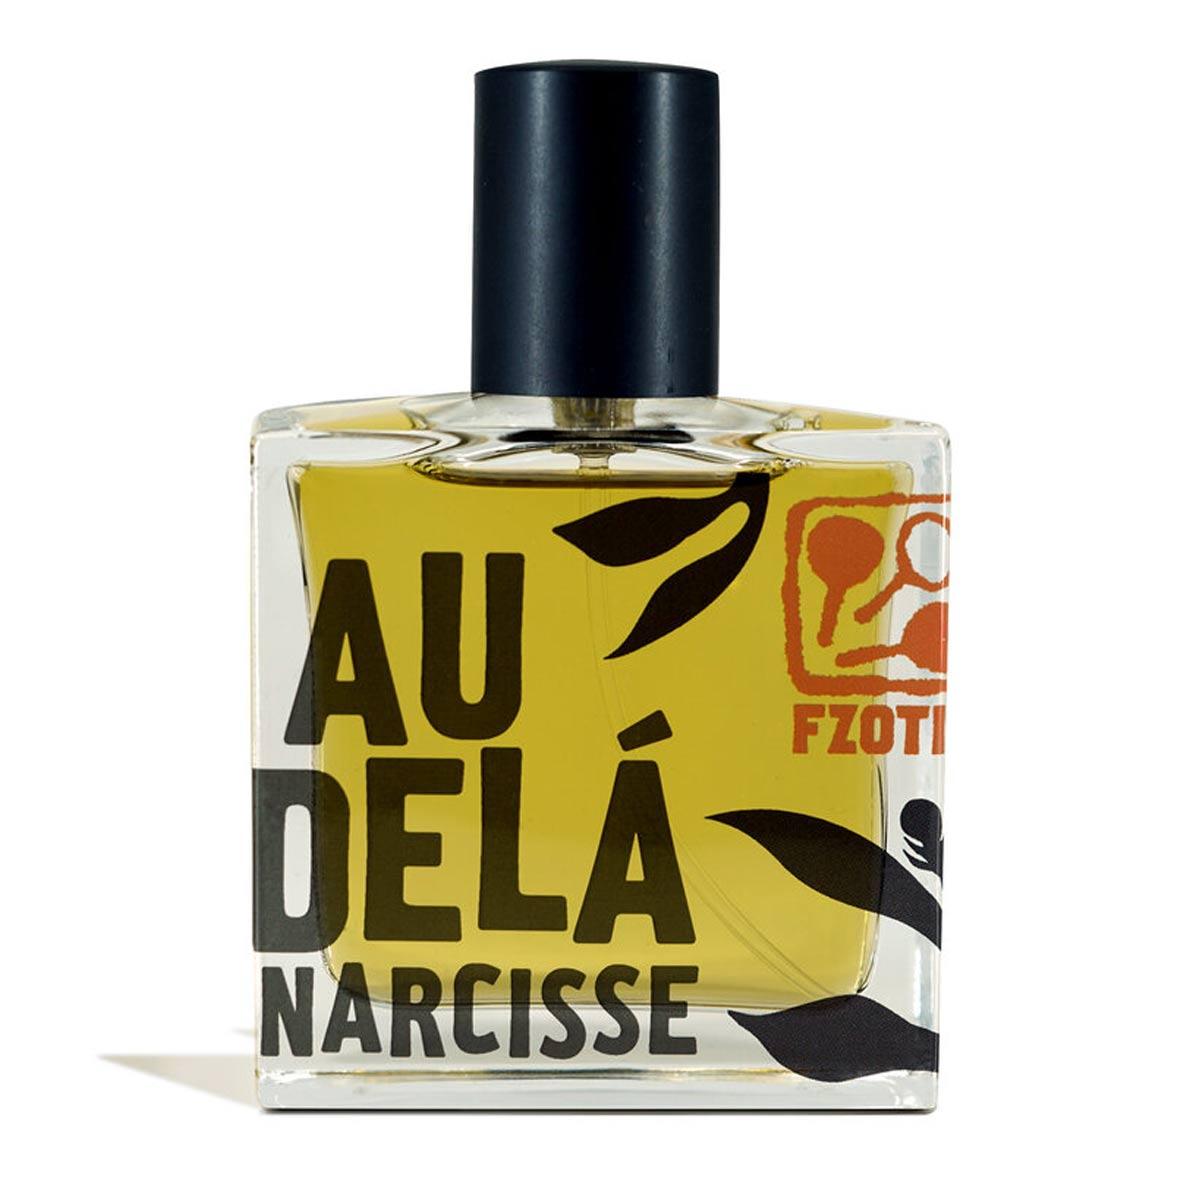 Primary image of Au Dela Narcisse